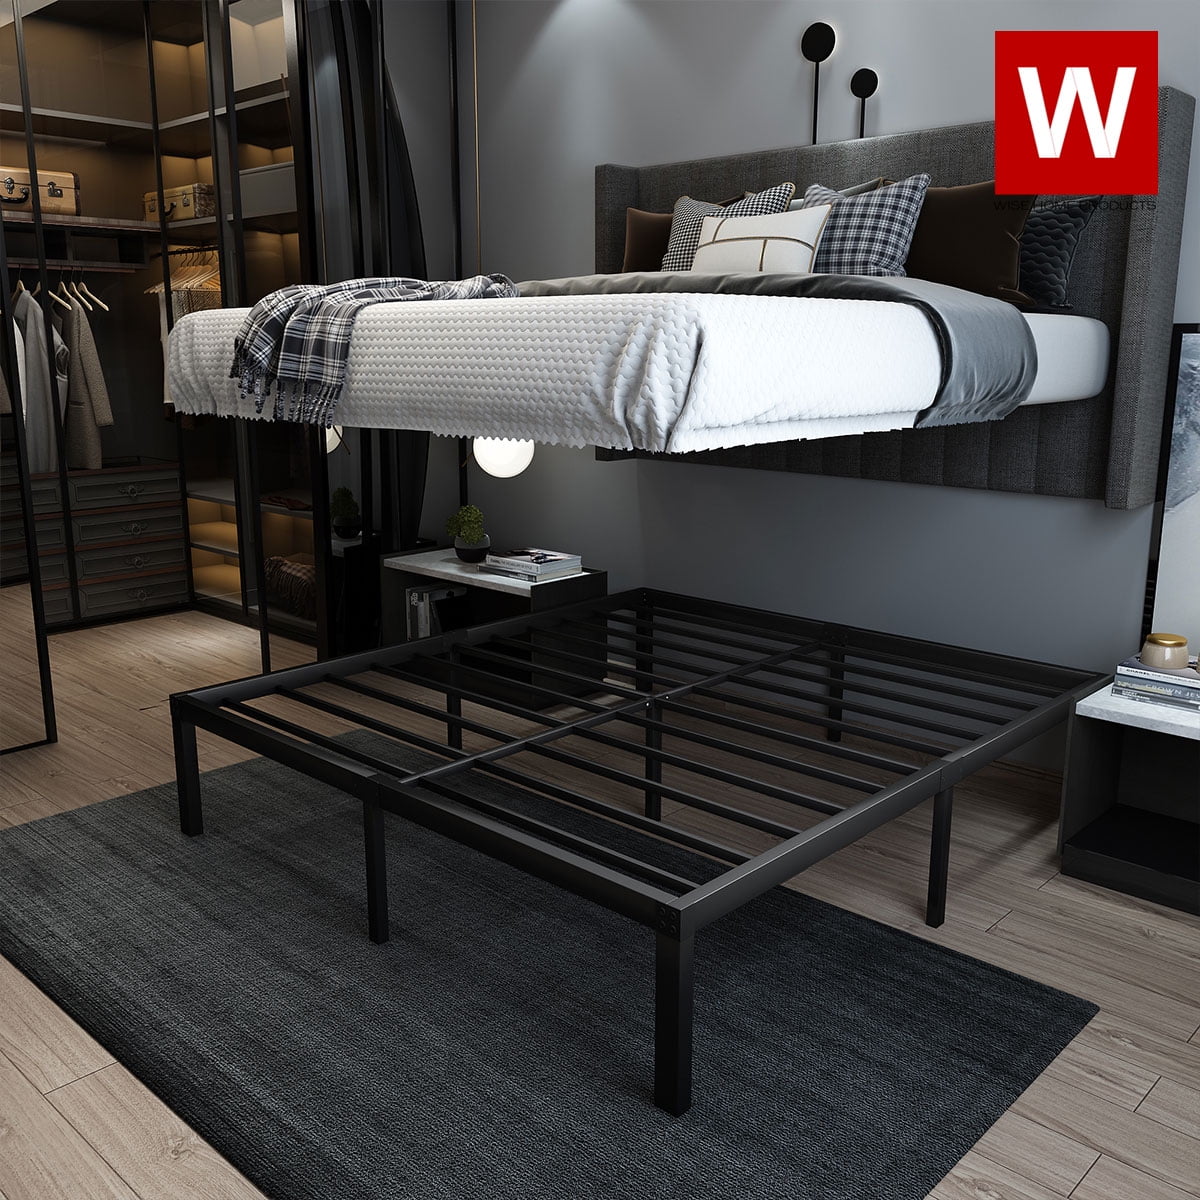 King Size Metal Platform Bed Frame With, King Size Platform Bed With Drawers